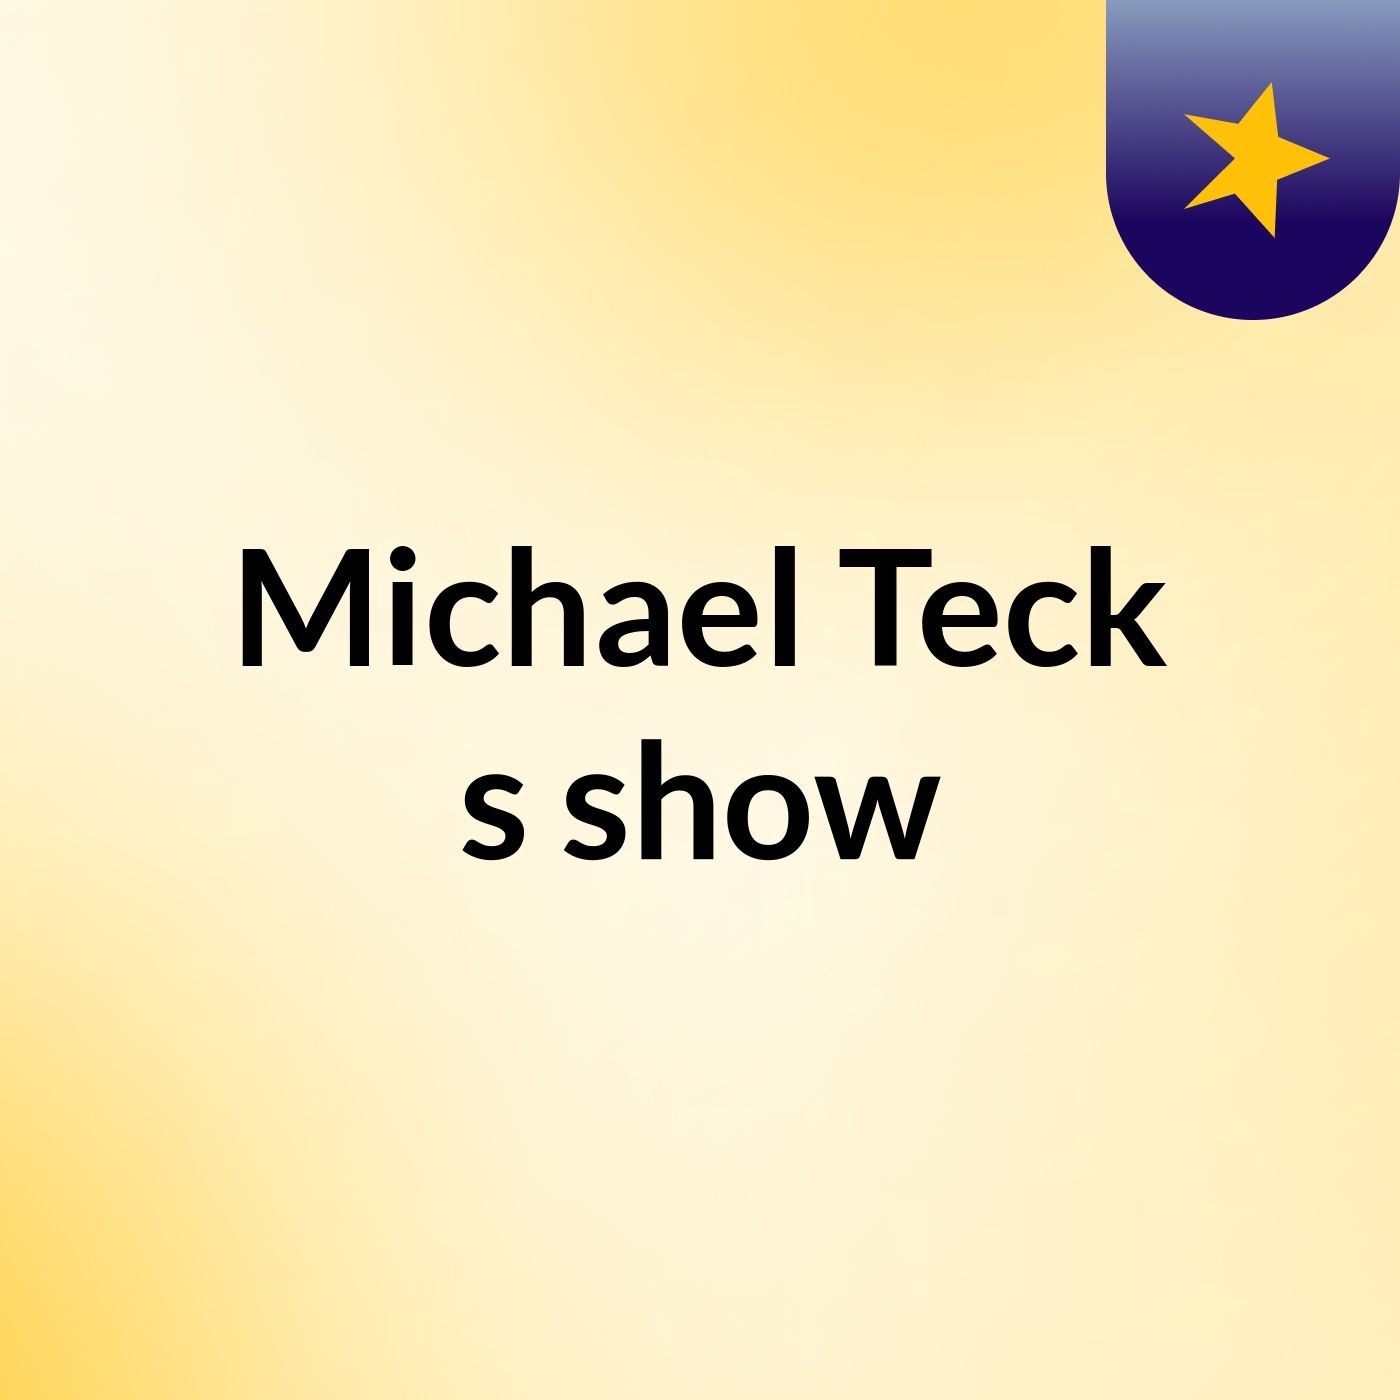 Michael Teck's show